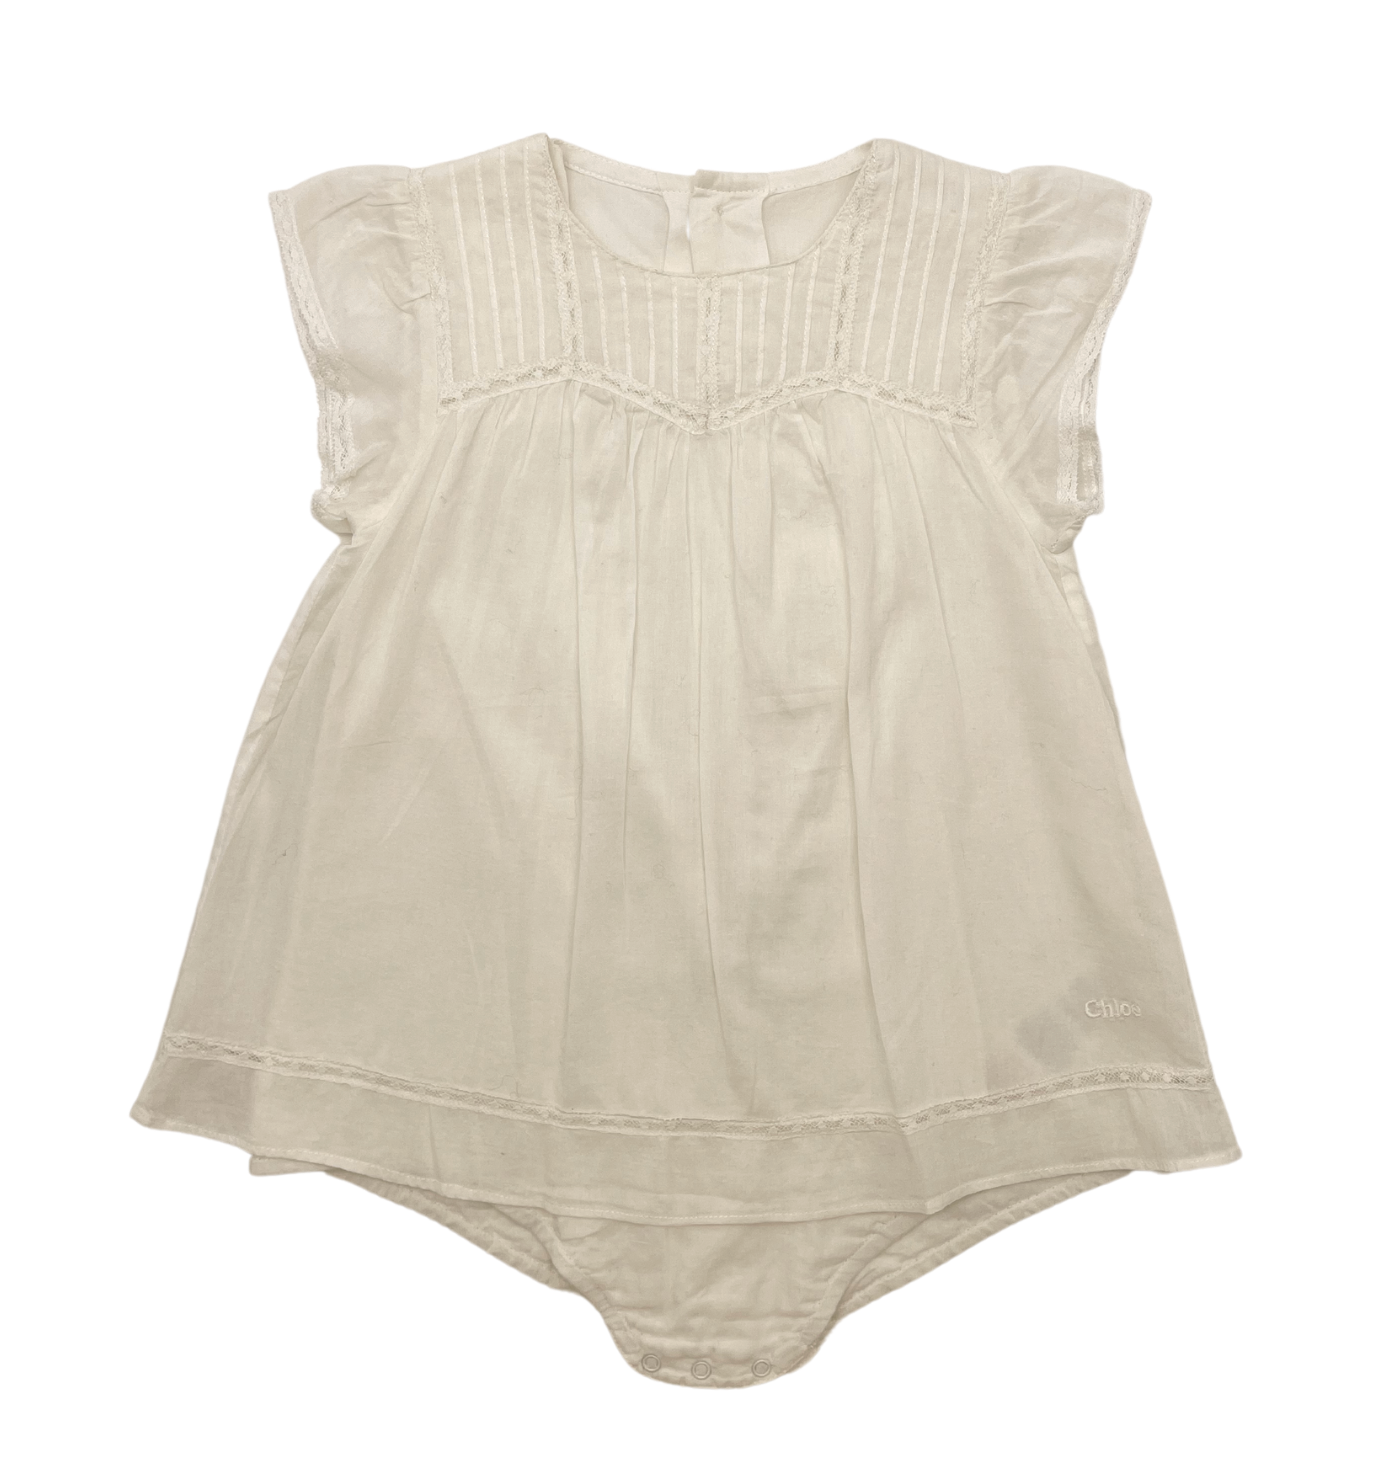 CHLOÉ - White dress - 1 year old